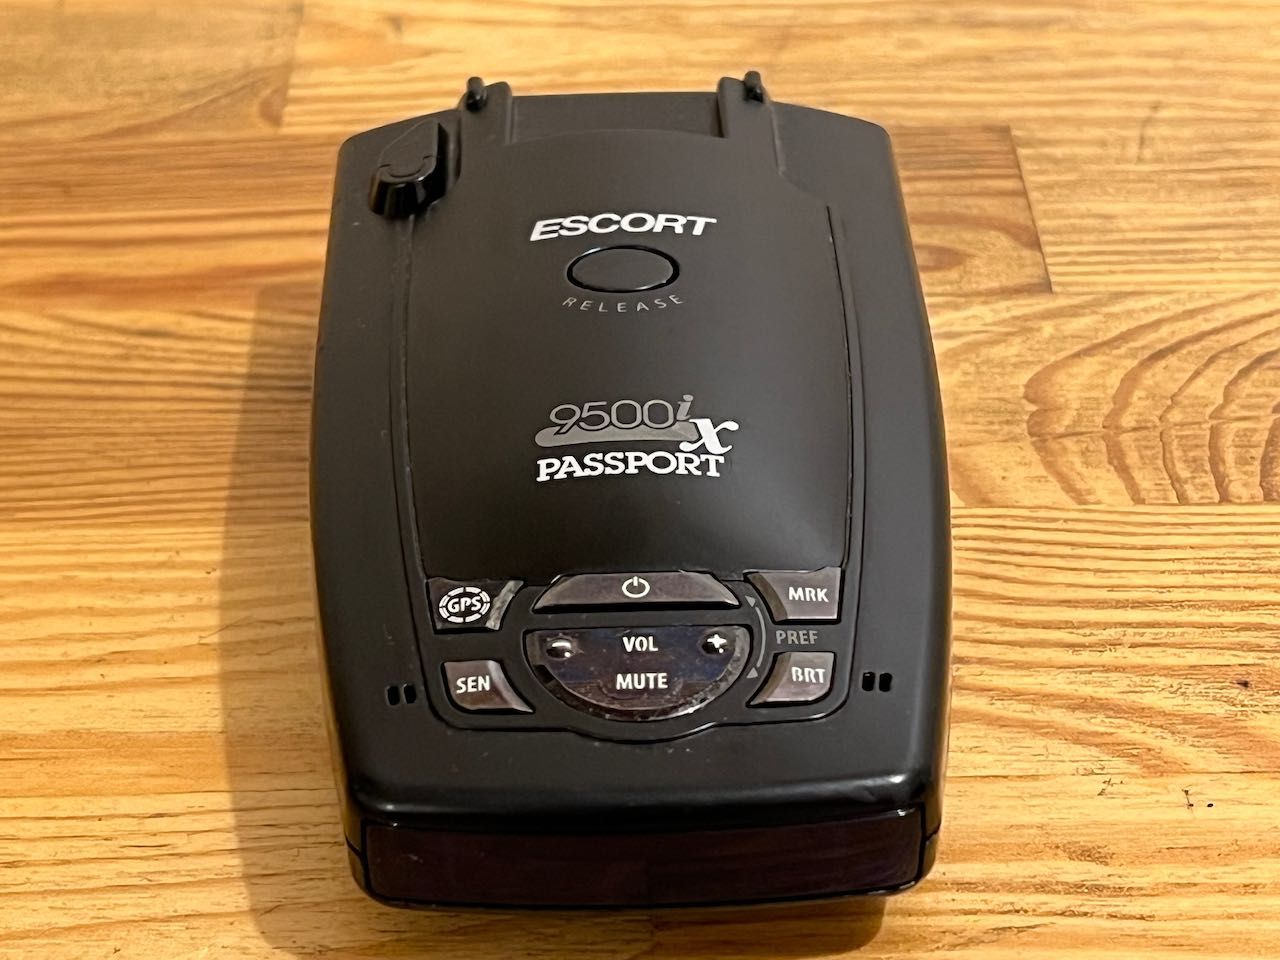 Радар детектор Escort Passport 9500iX